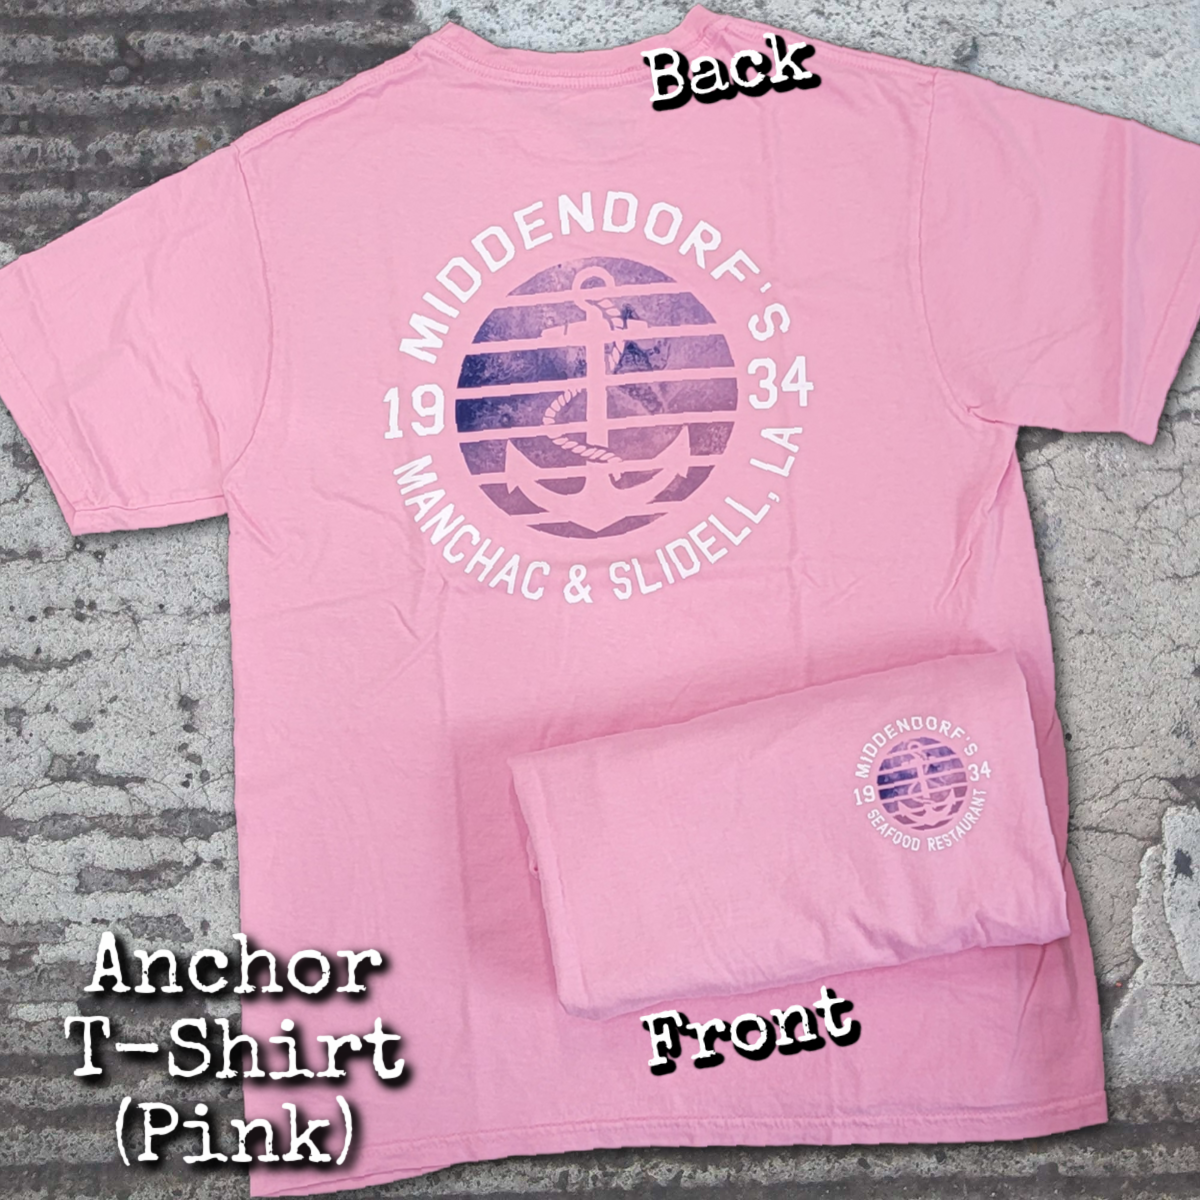 Anchor T-shirt - Pink